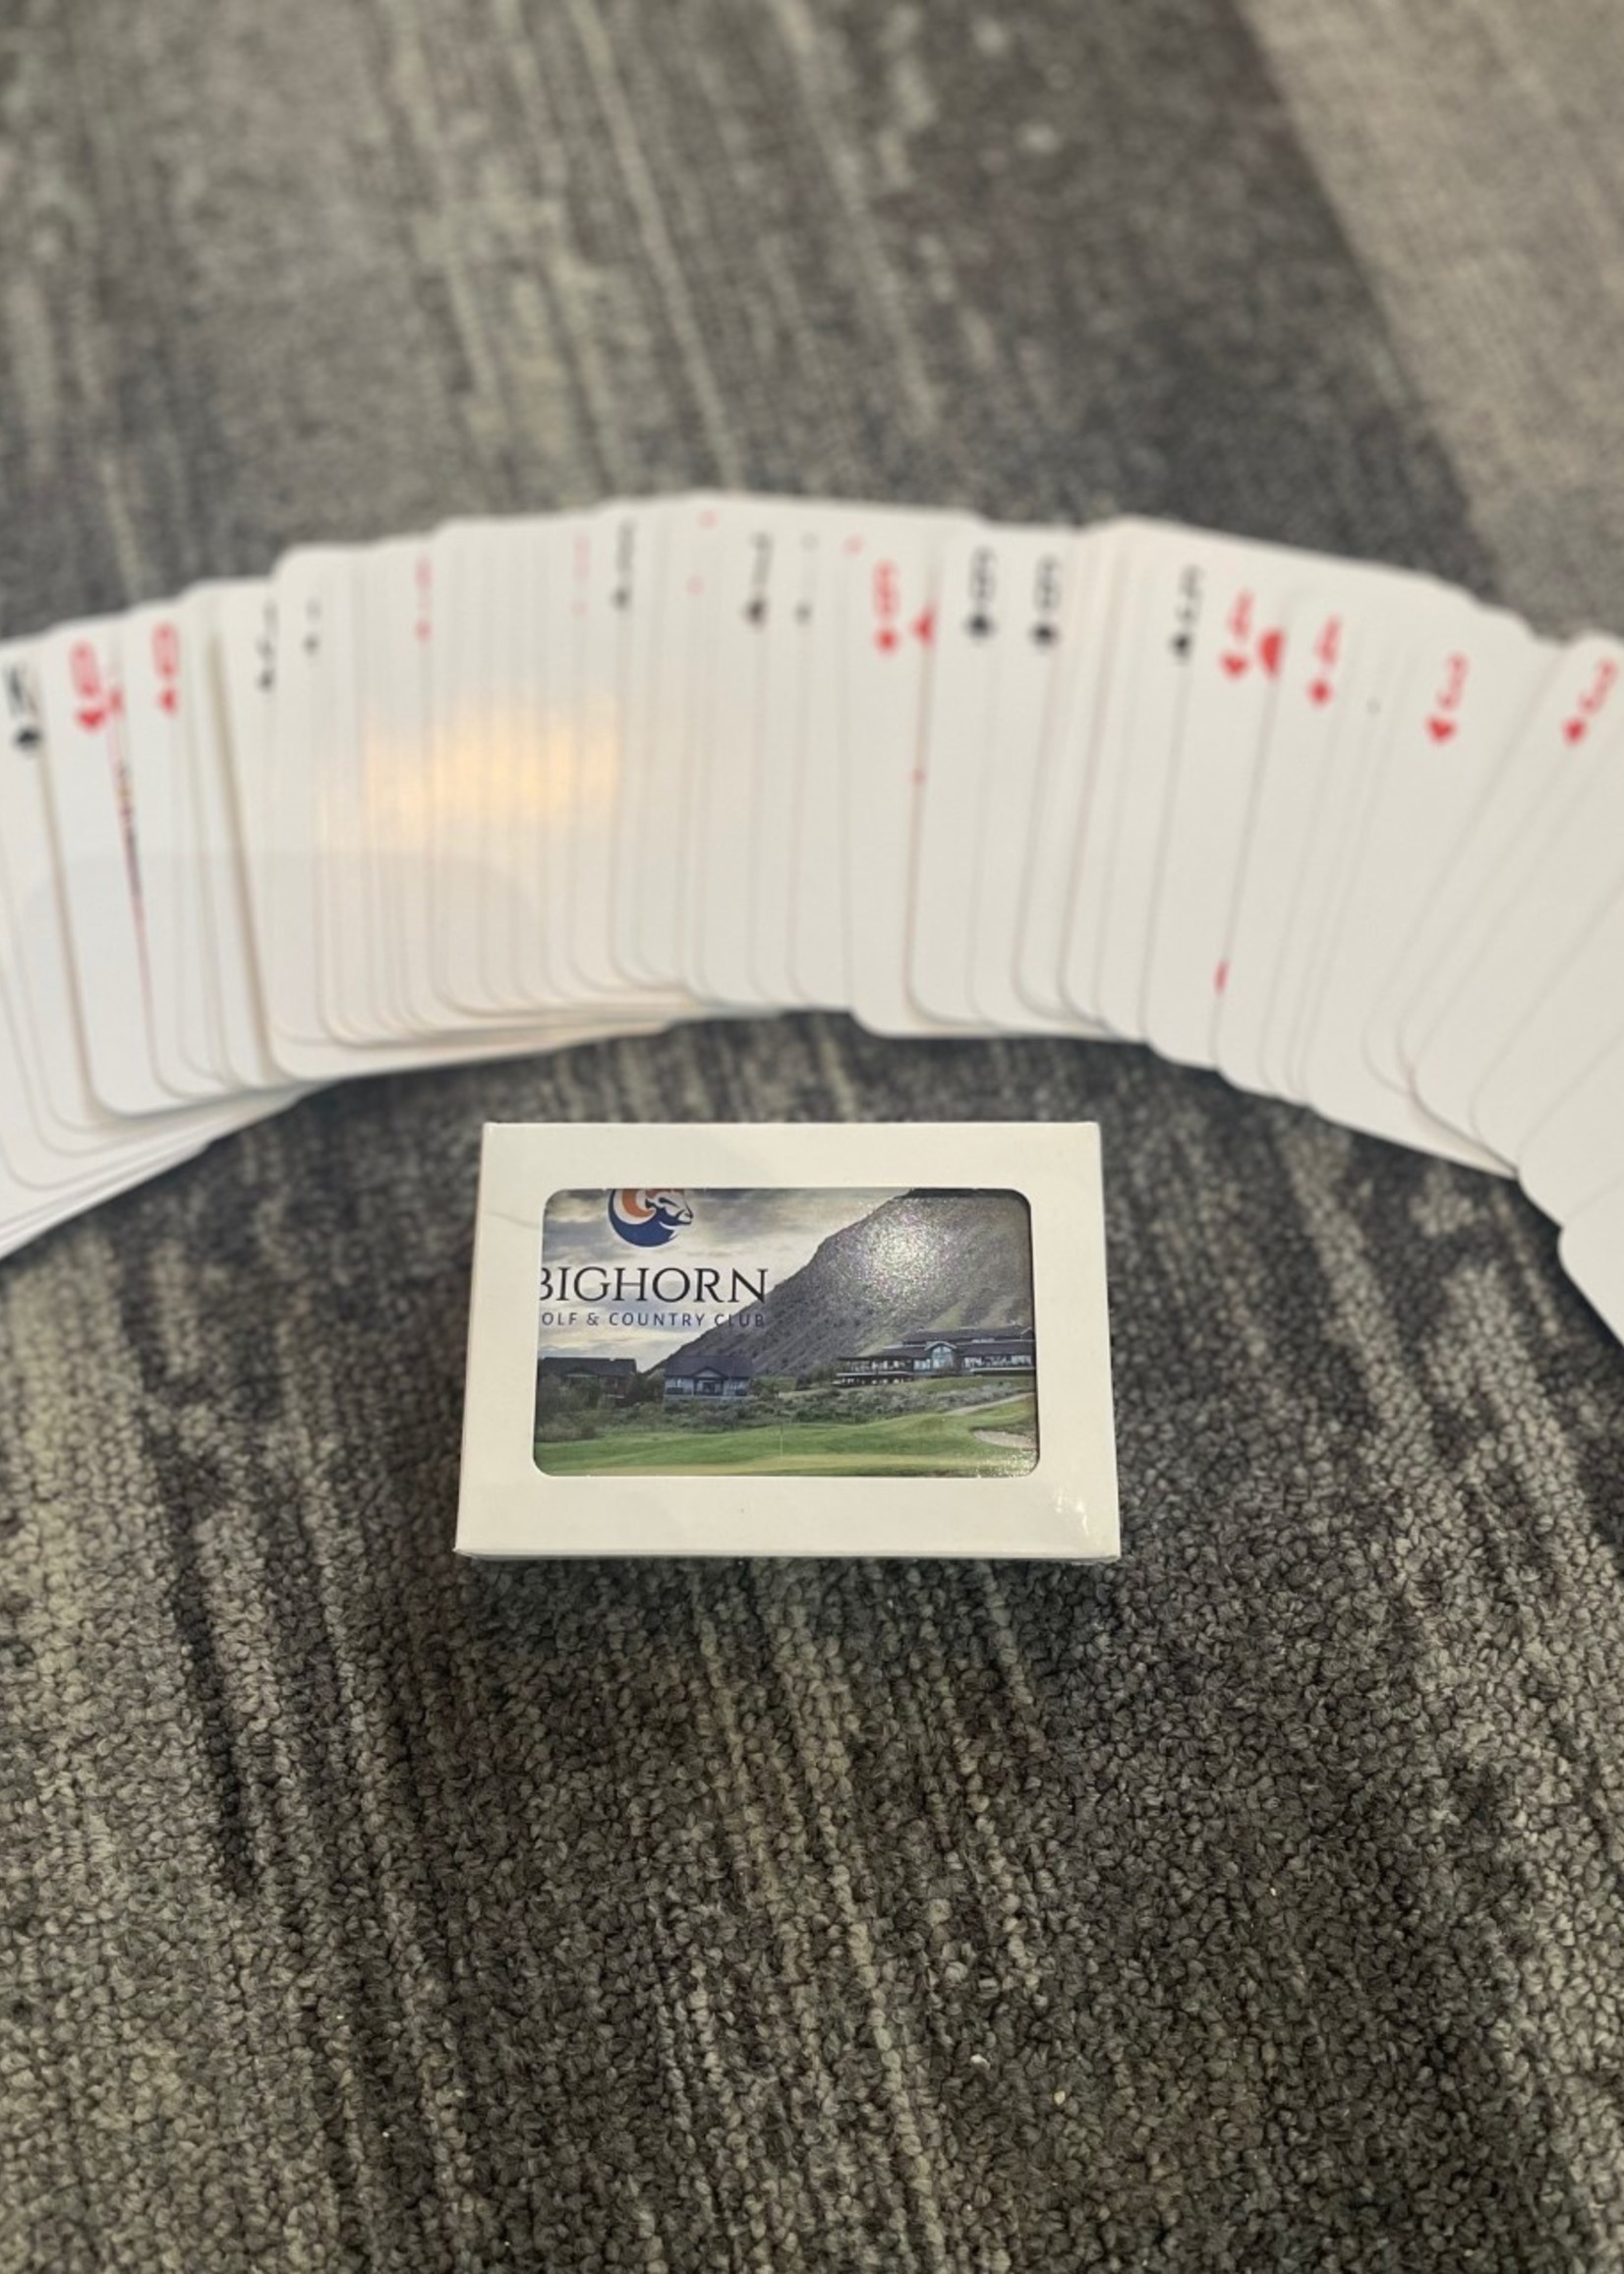 Bighorn Playing Cards